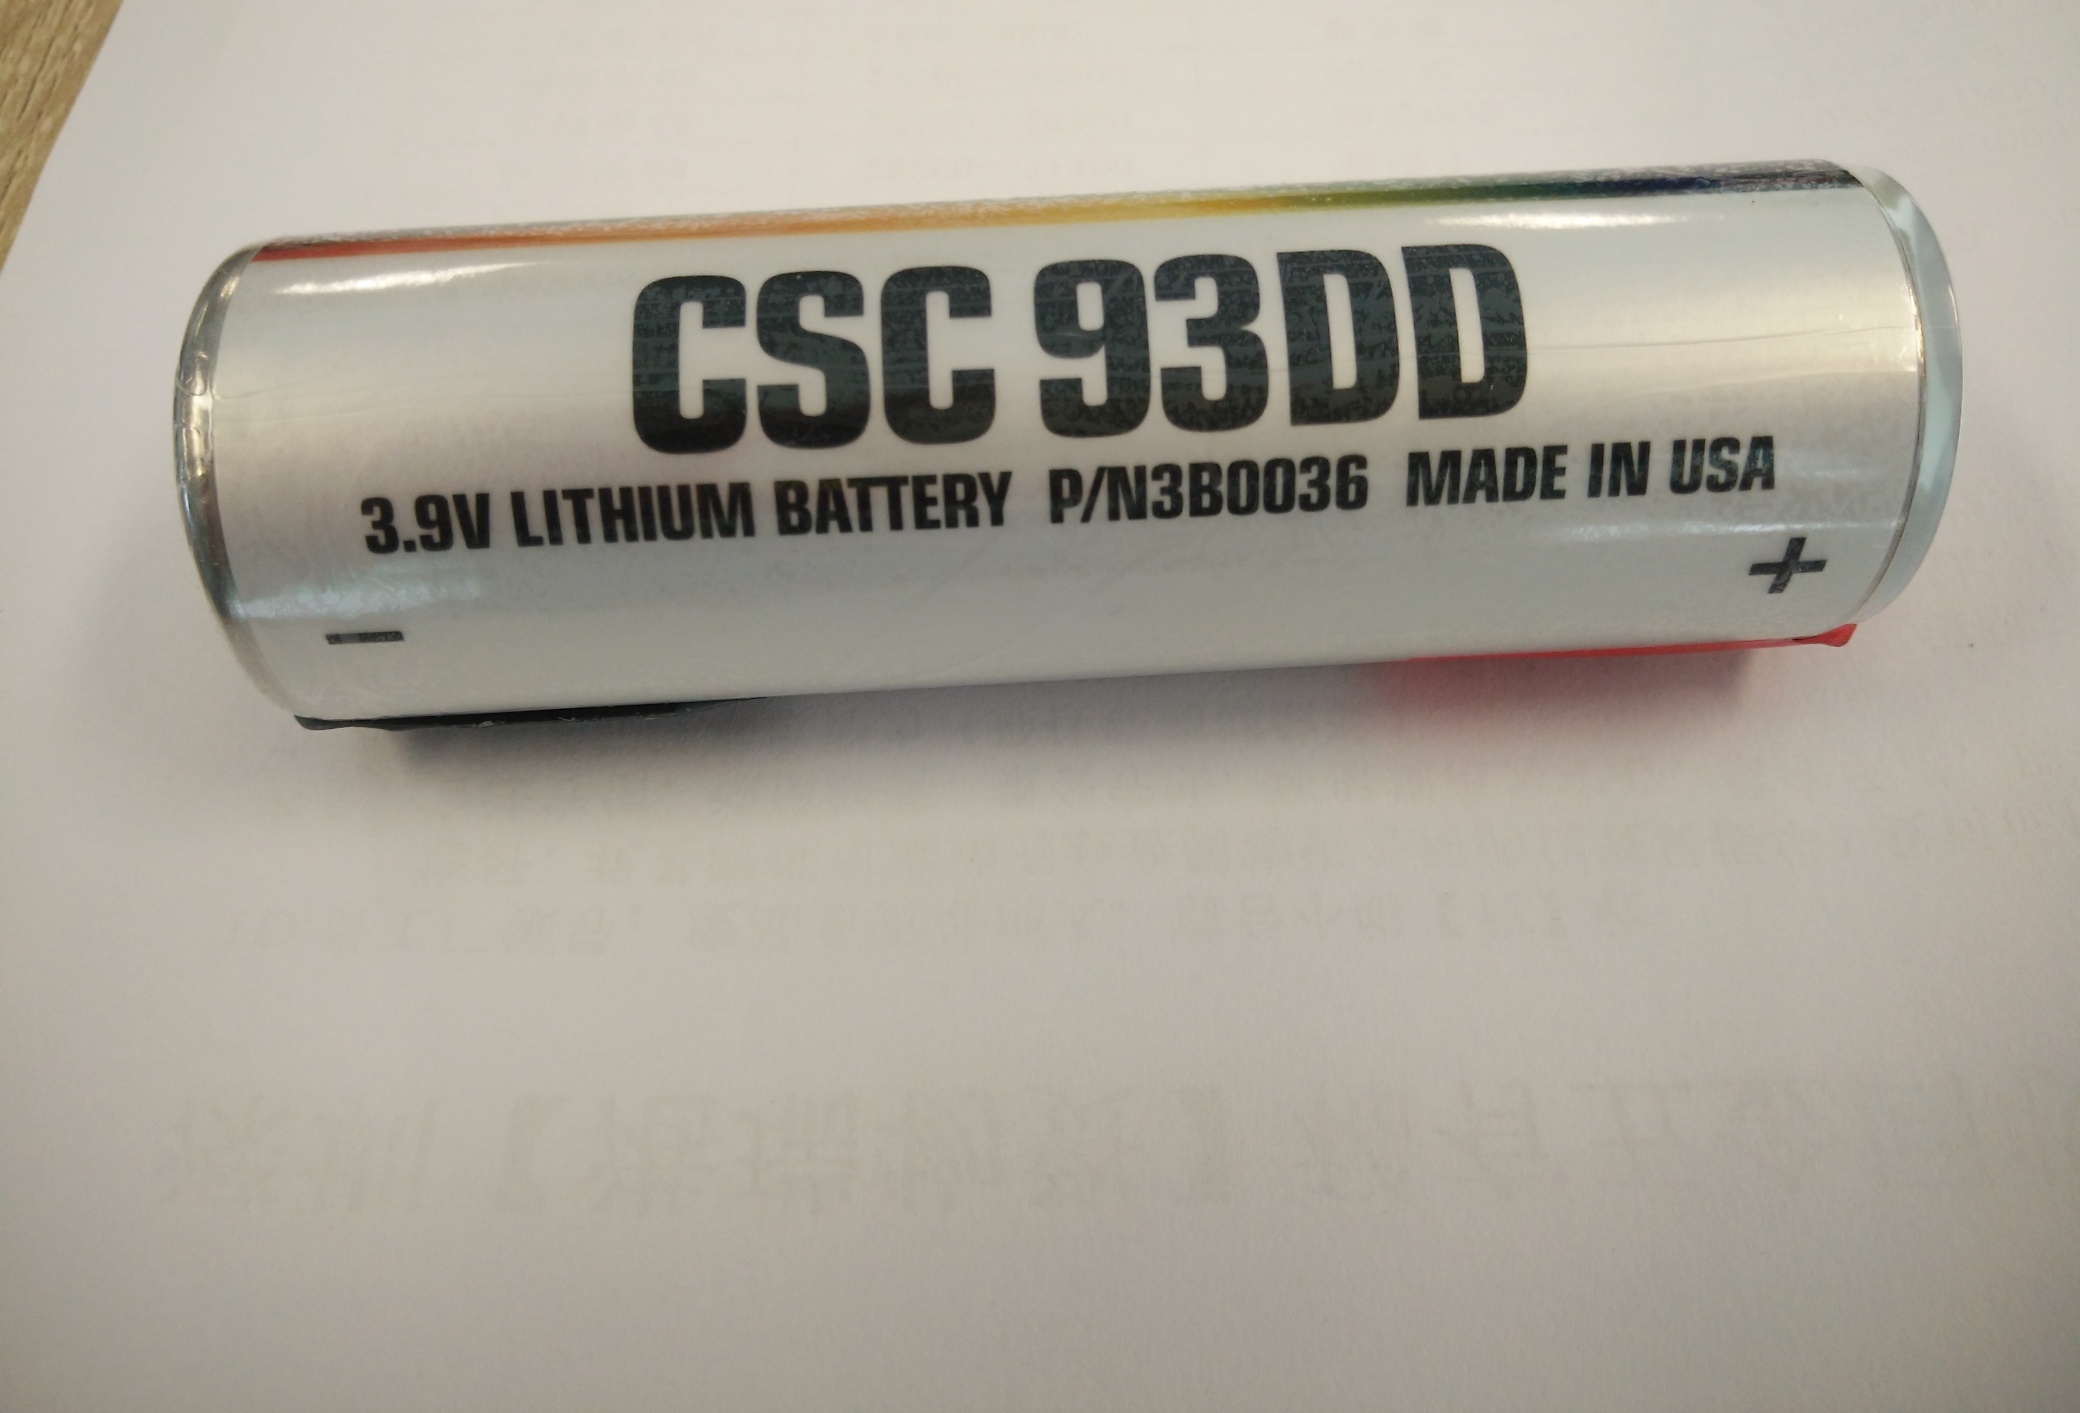 Electrochem高温锂电池CSC93 DD 3B0036